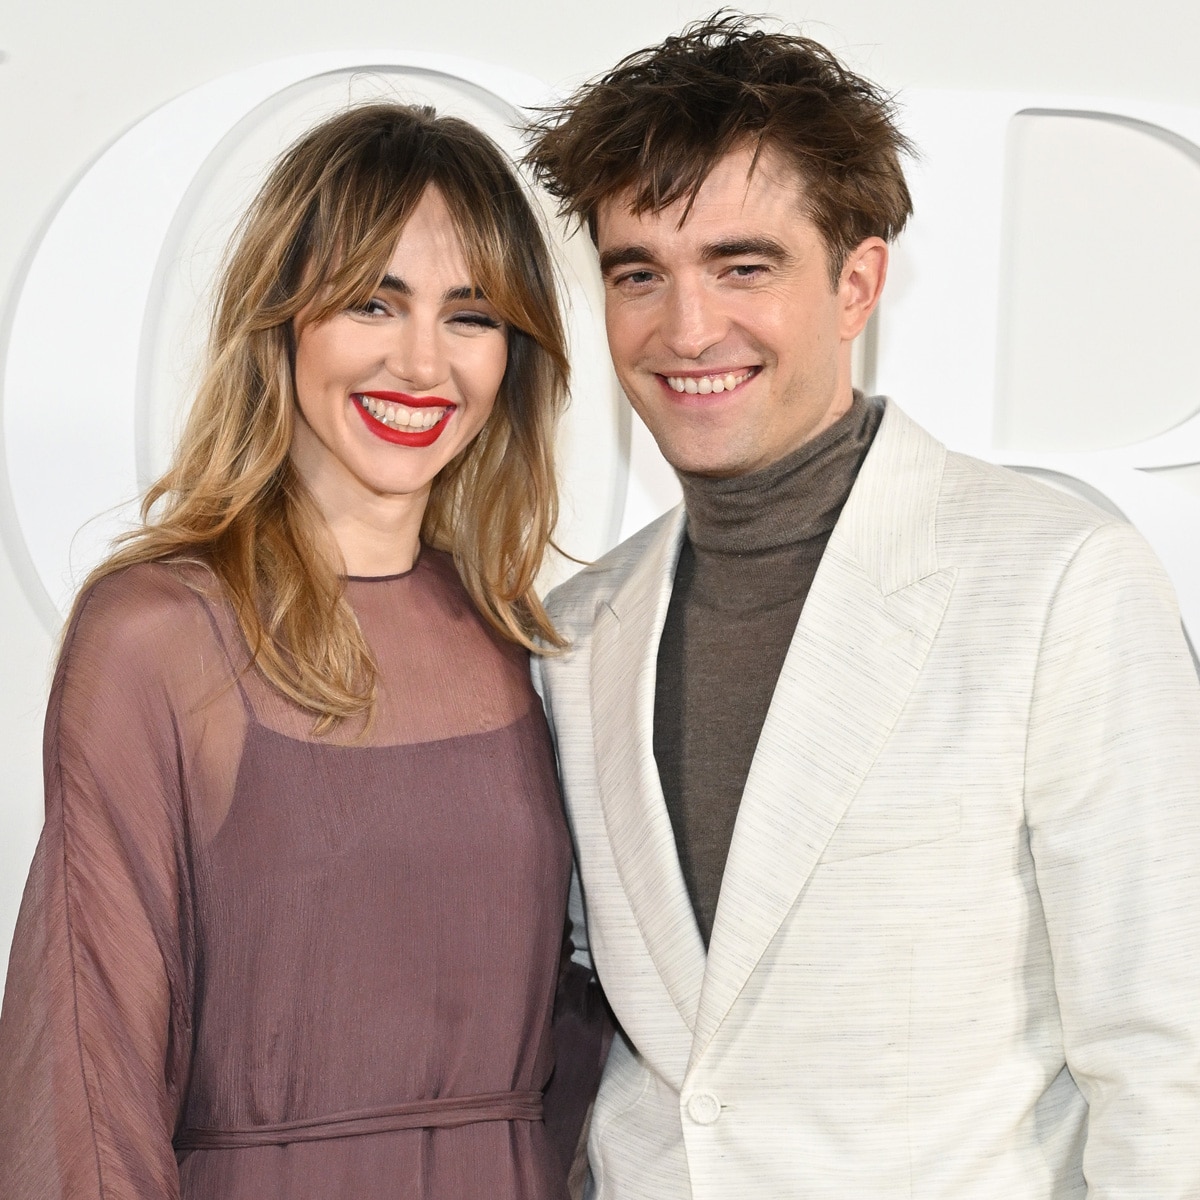 Robert Pattinson and Girlfriend Suki Waterhouse Make Red Carpet Debut